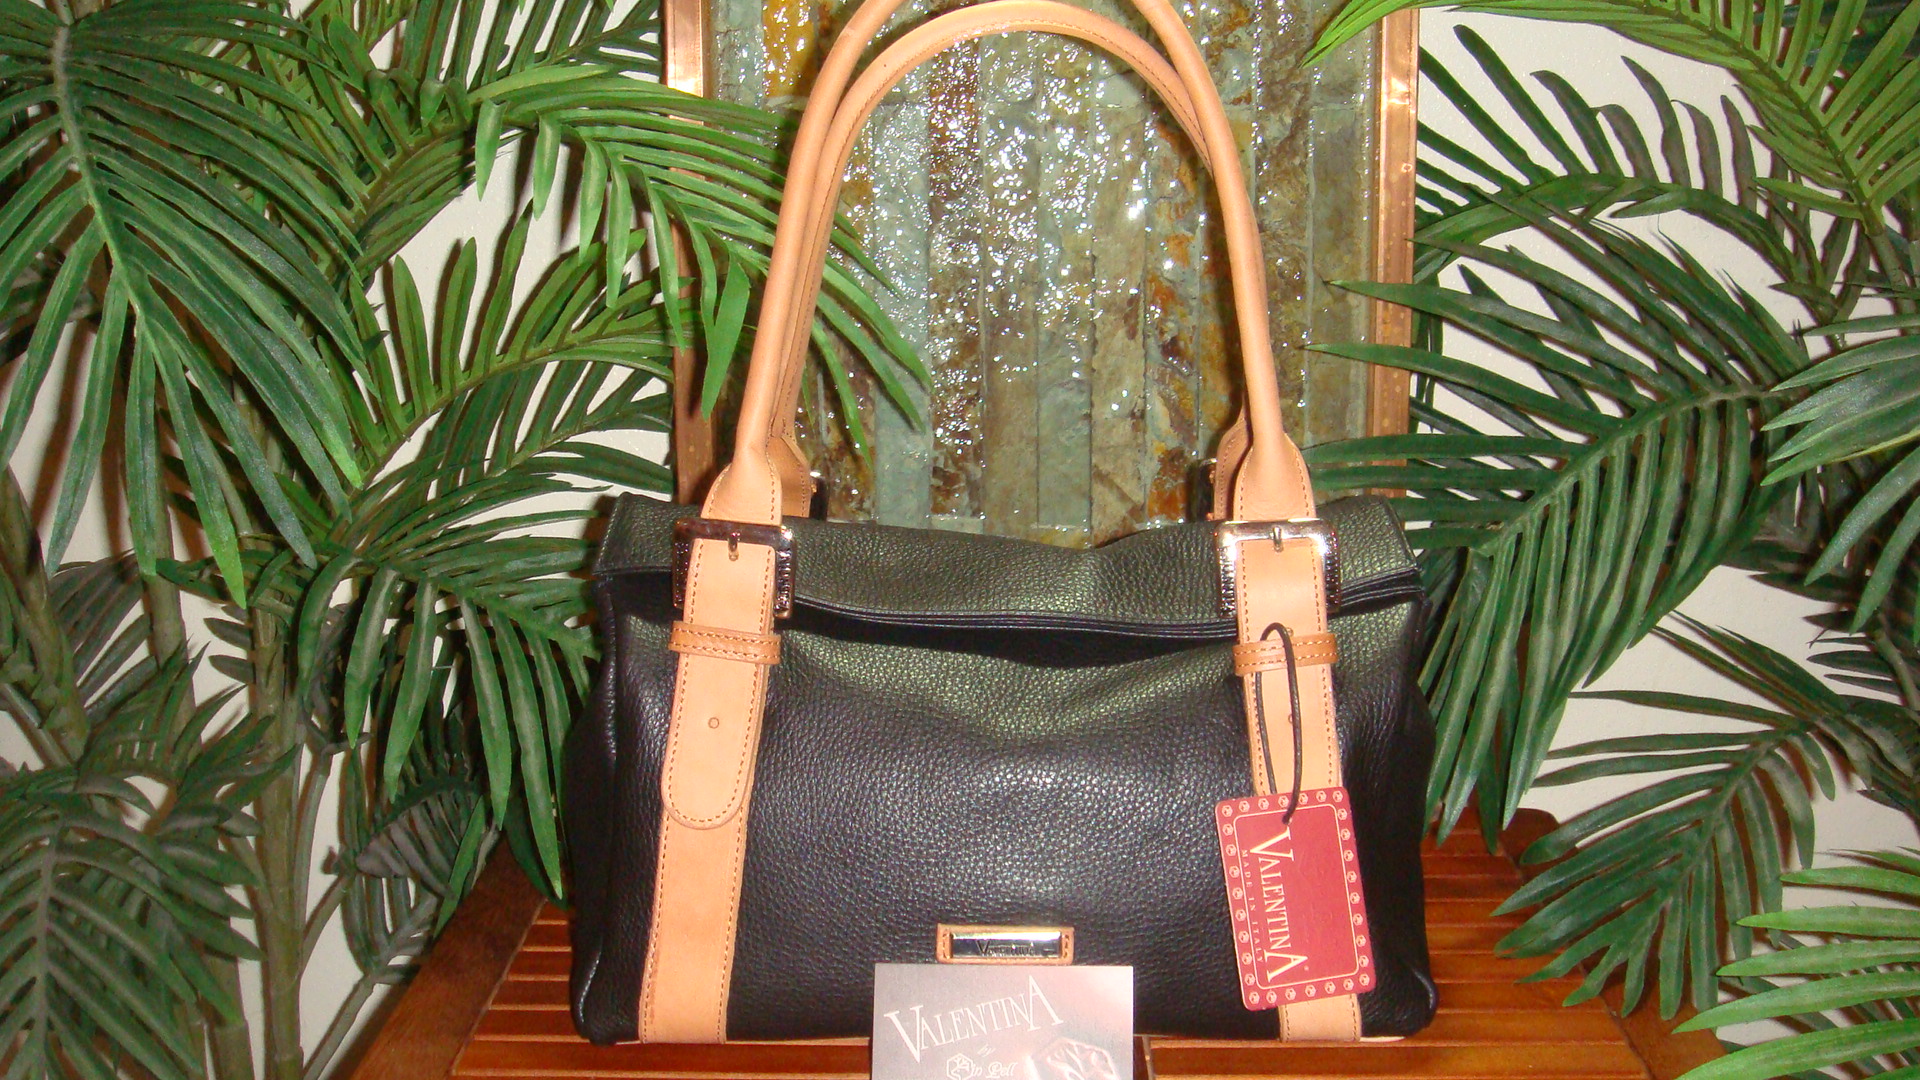 Valentina handbags : Style 1819